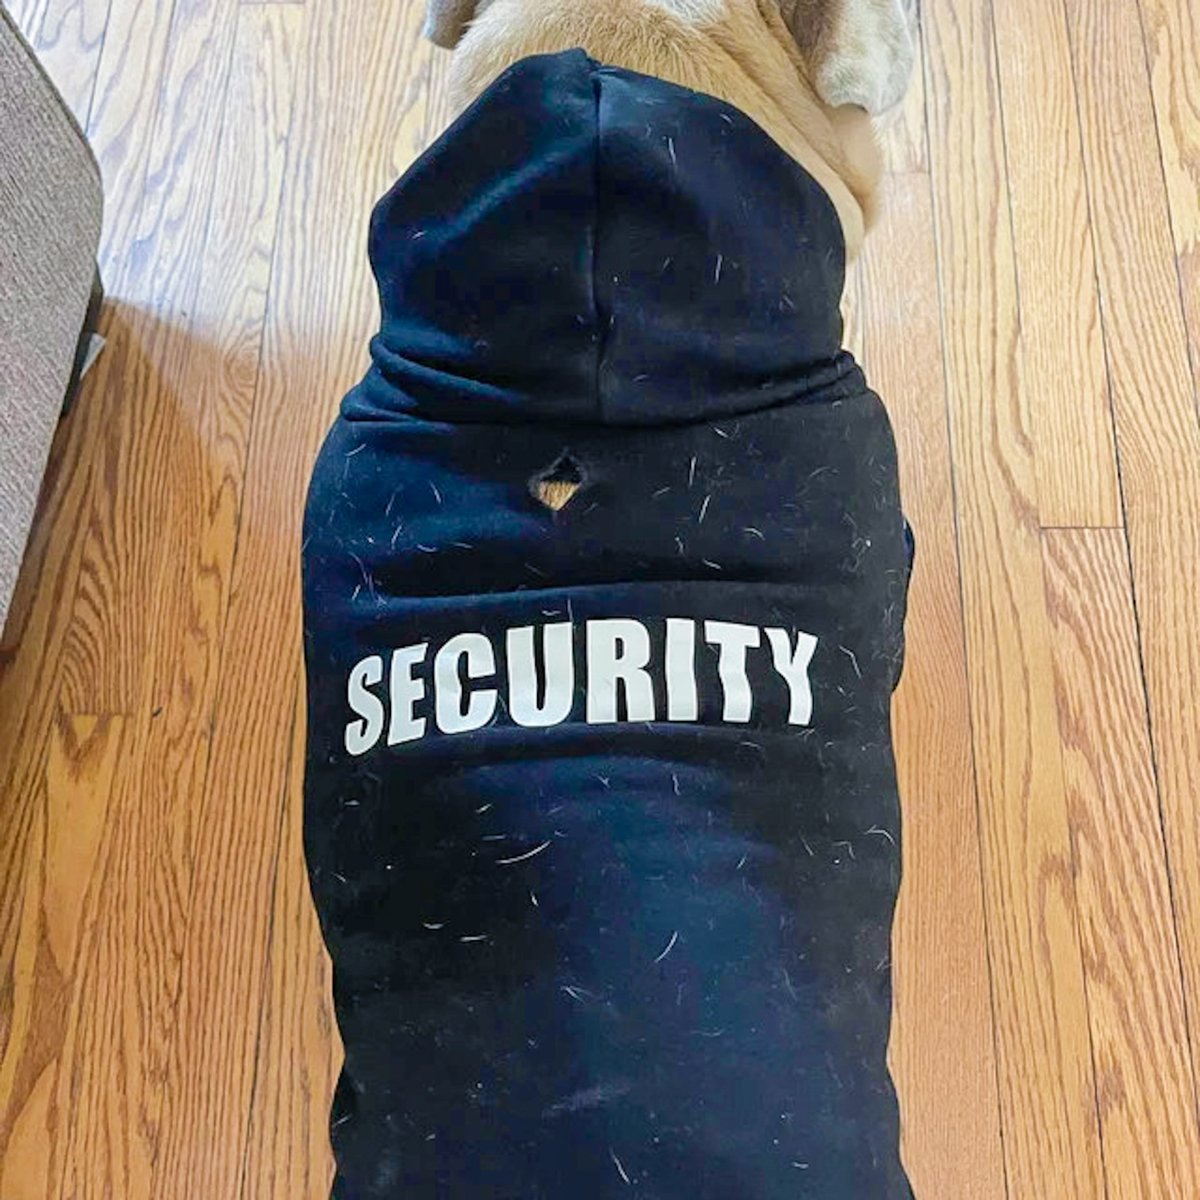 It's not dog hair, it's ✨glitter✨

#securitydog #dogsweater